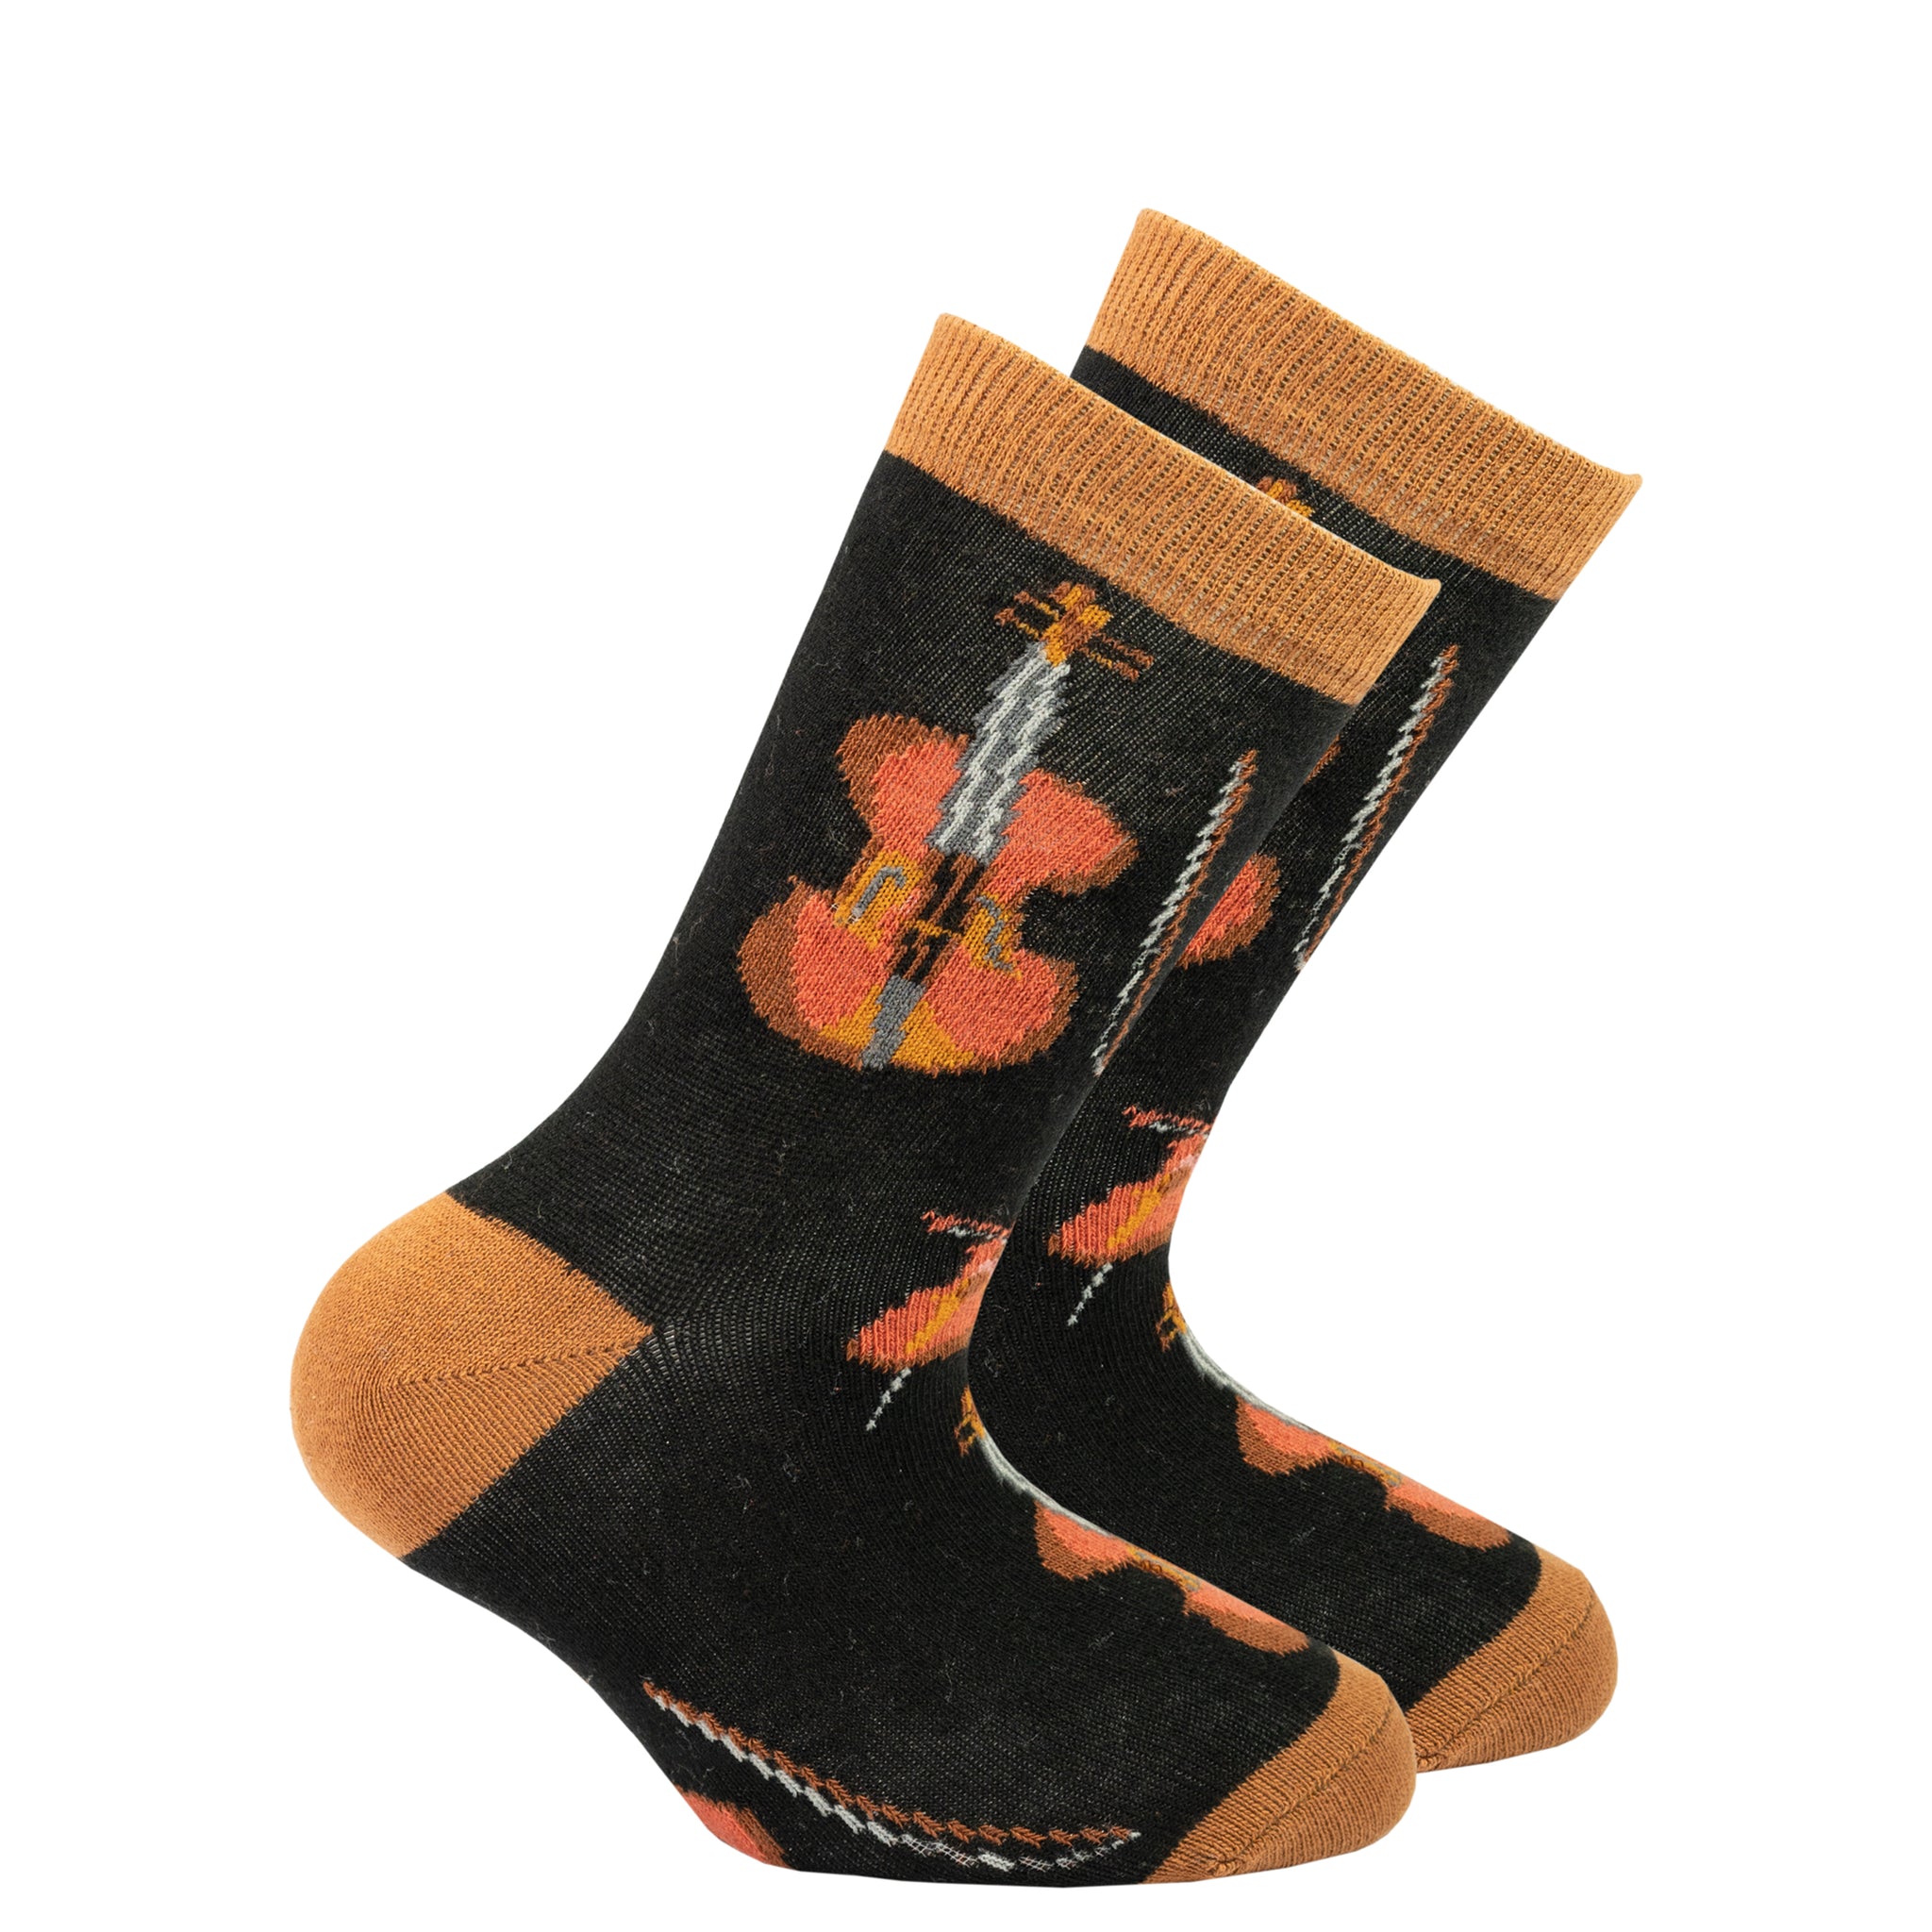 Kids Violin Socks black and orange